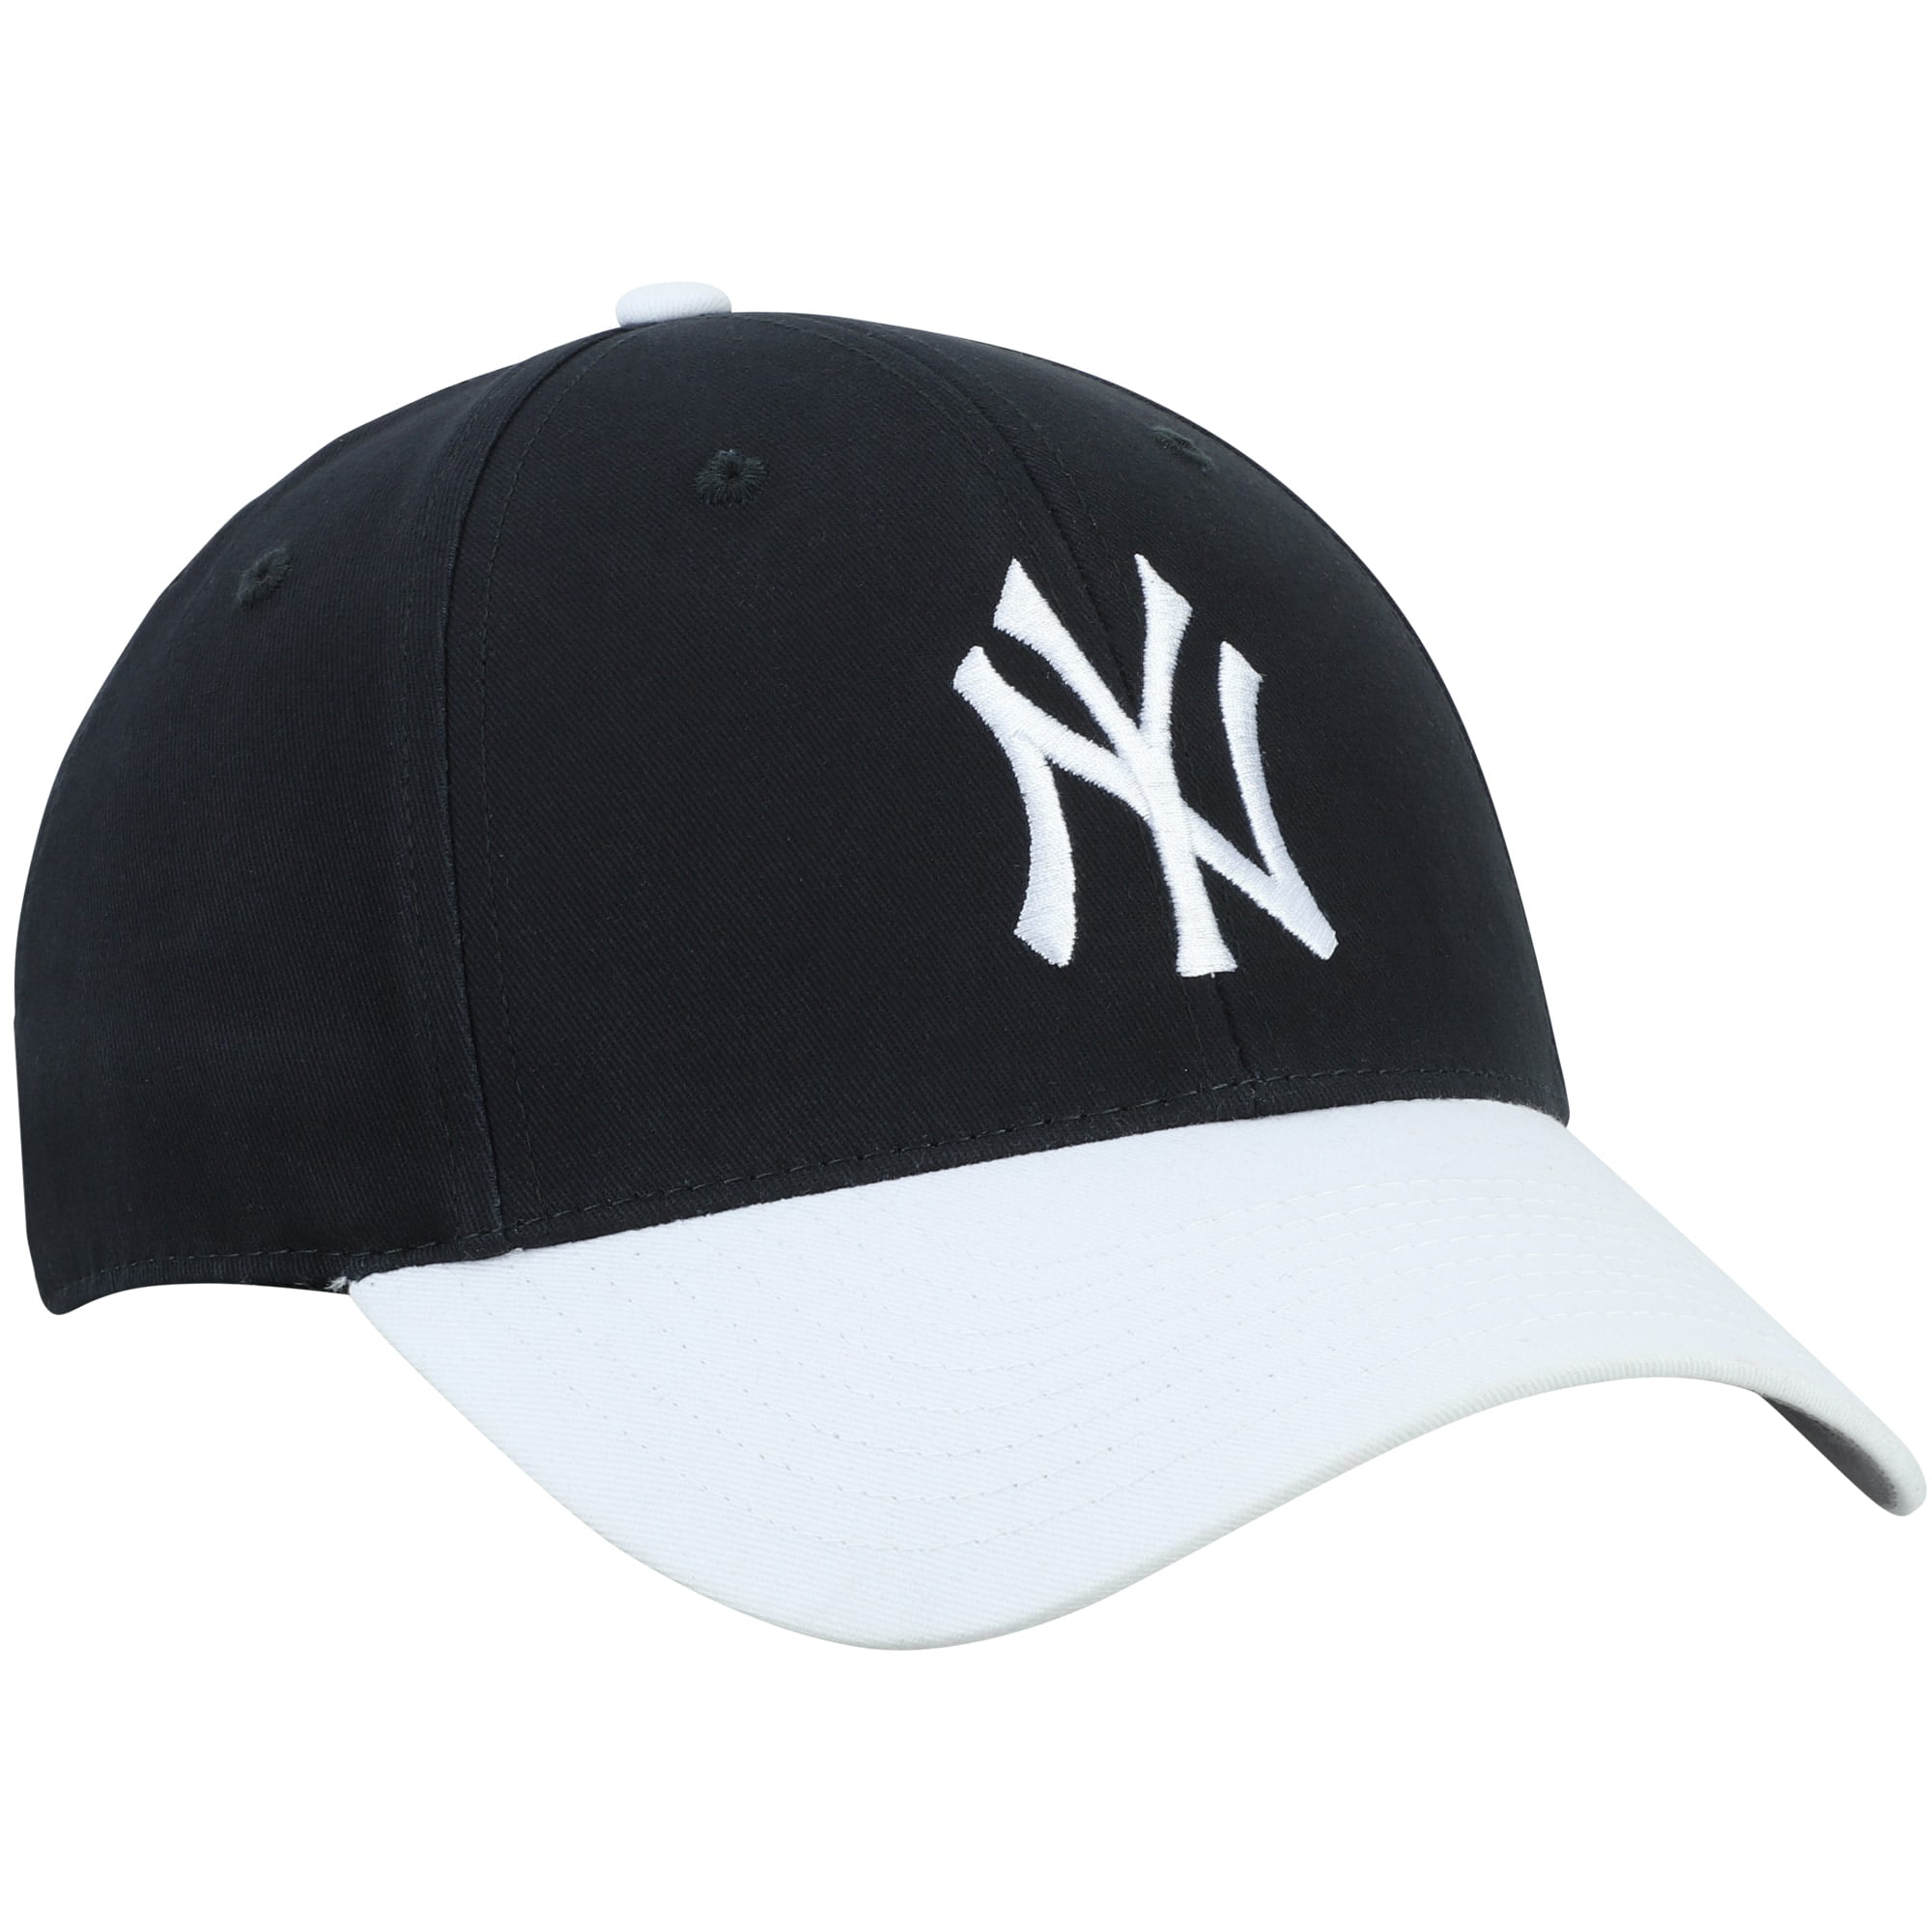 New York Yankees '47 Two-Tone Adjustable Hat - Navy/White - OSFA